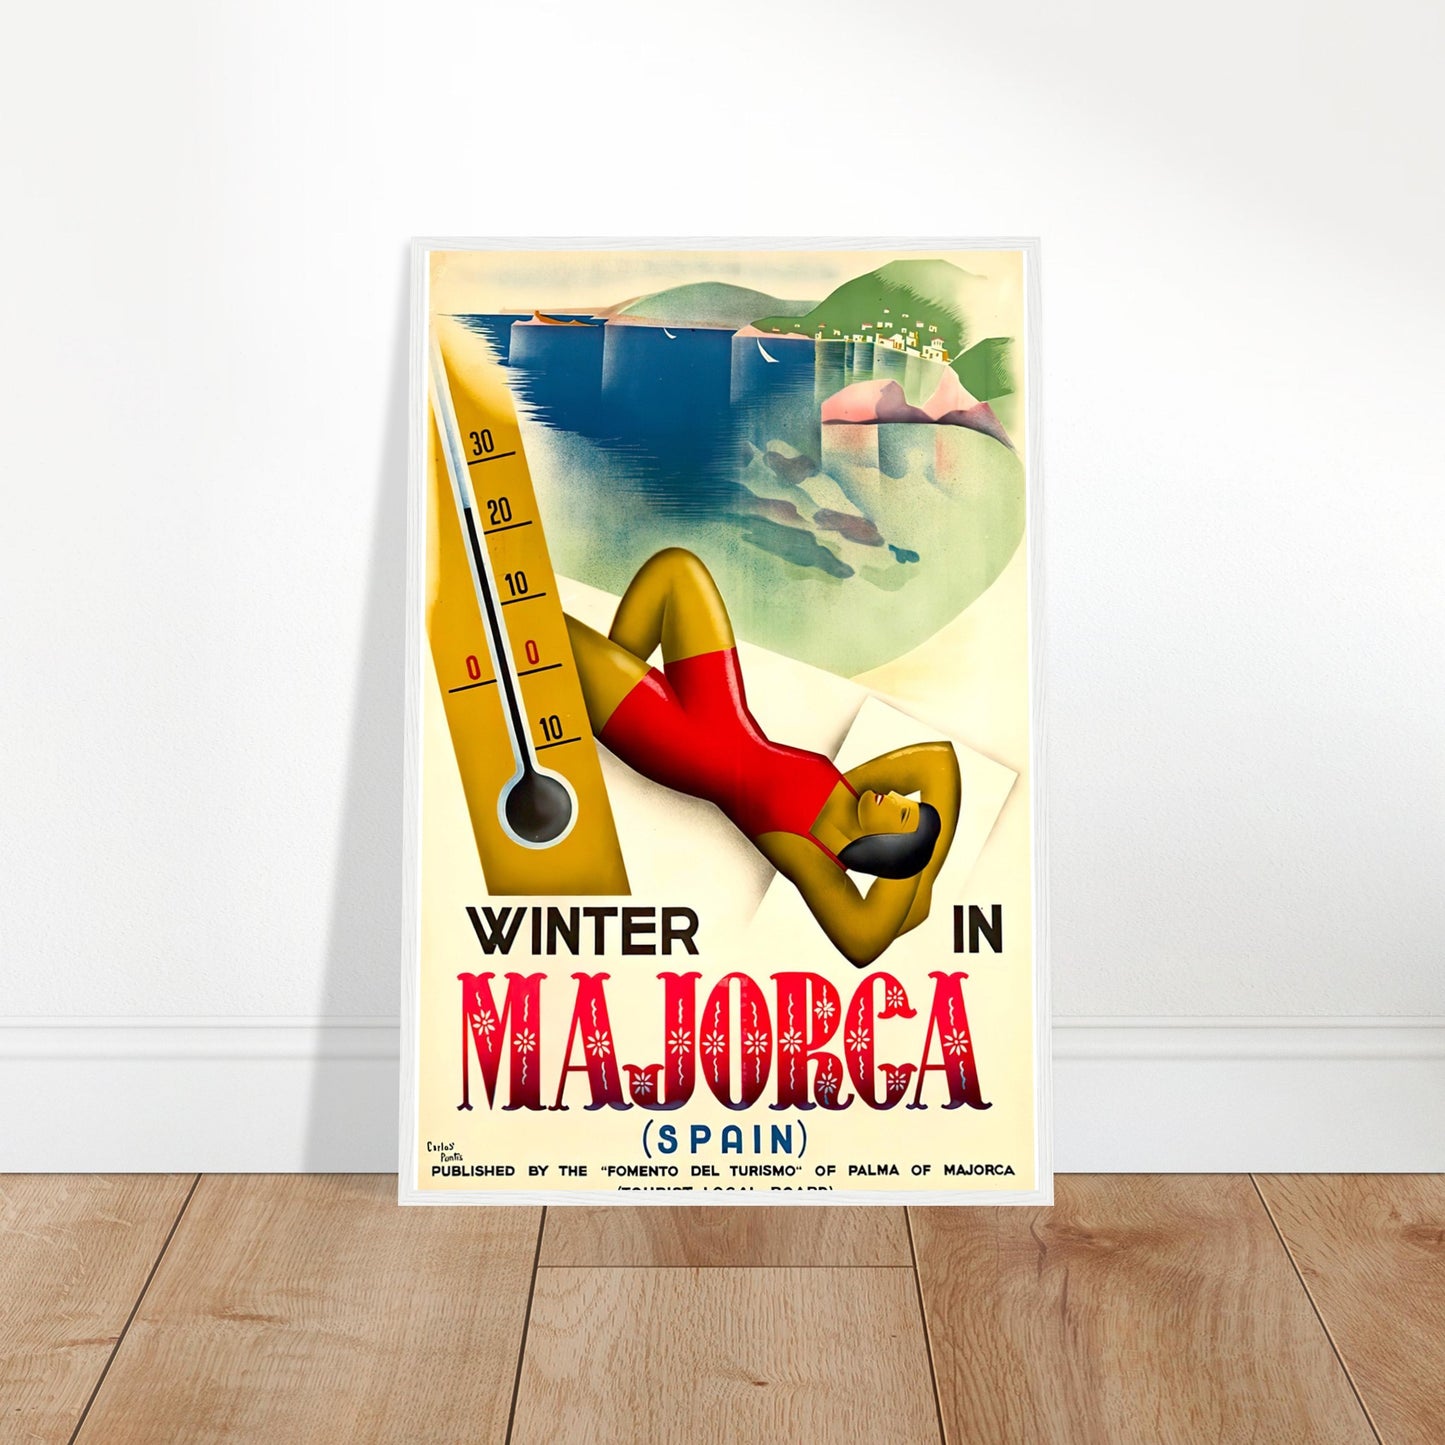 Mallorca in the Winter, Vintage Poster Reprint on Premium Matte Paper - Posterify